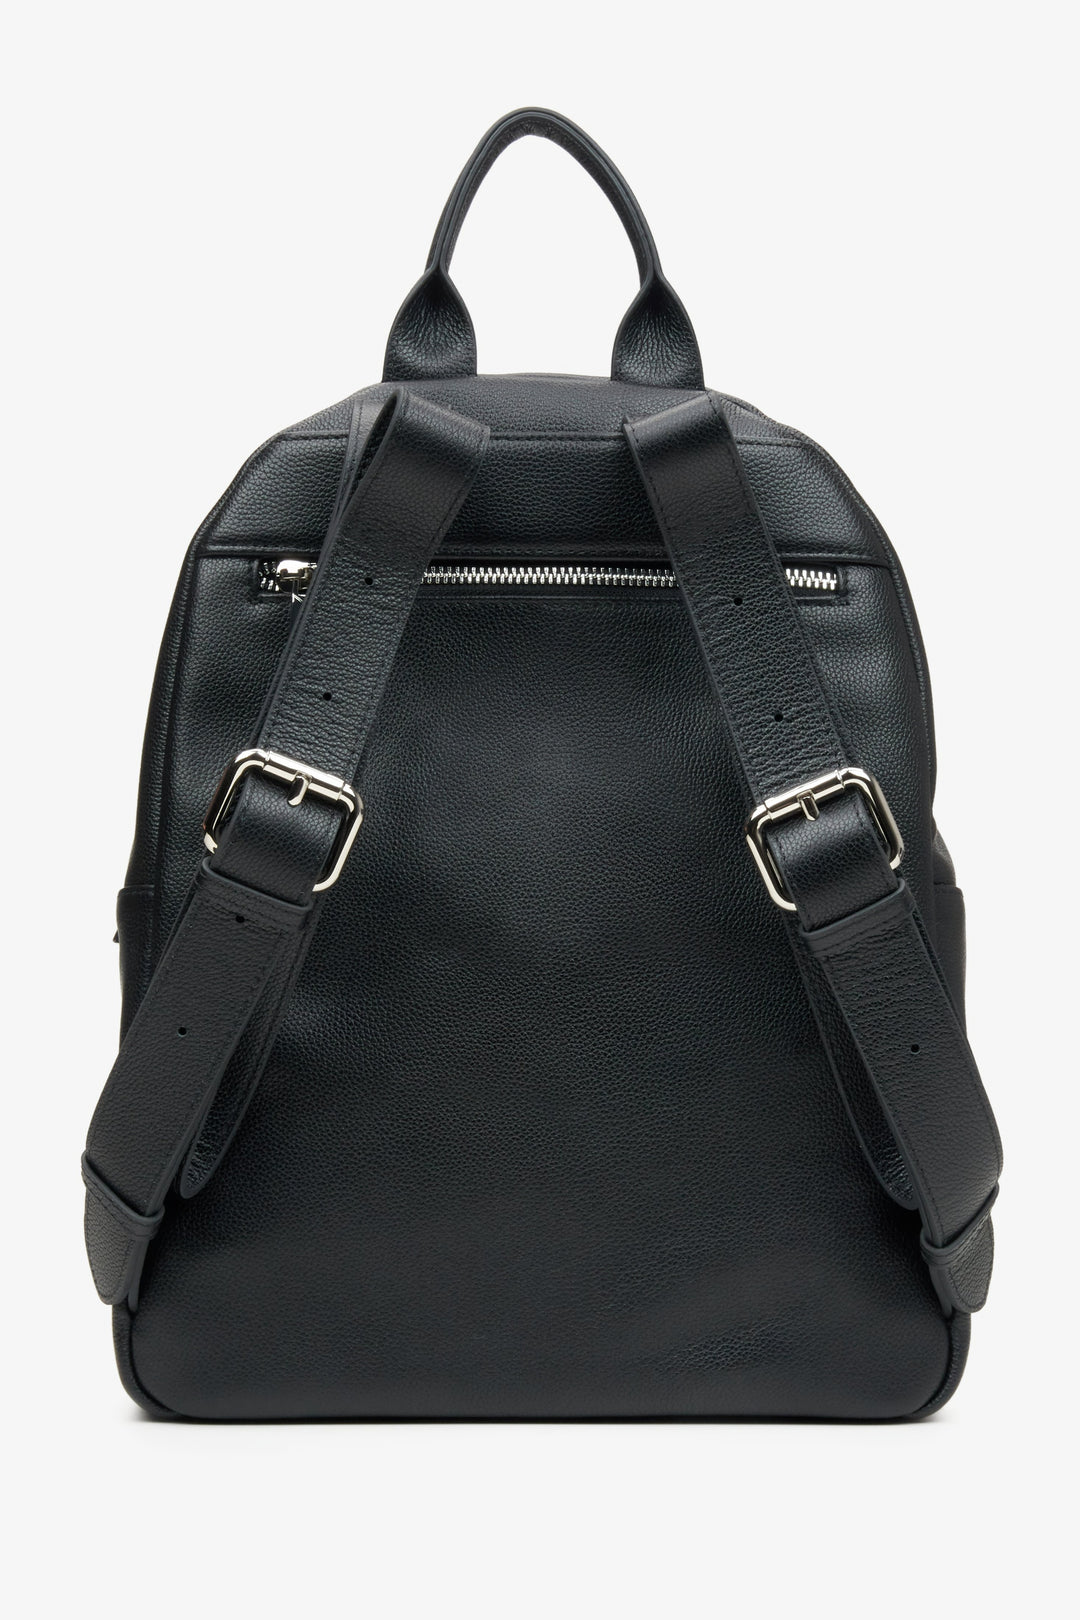 Women's black leather backpack by Estro - reverse side.